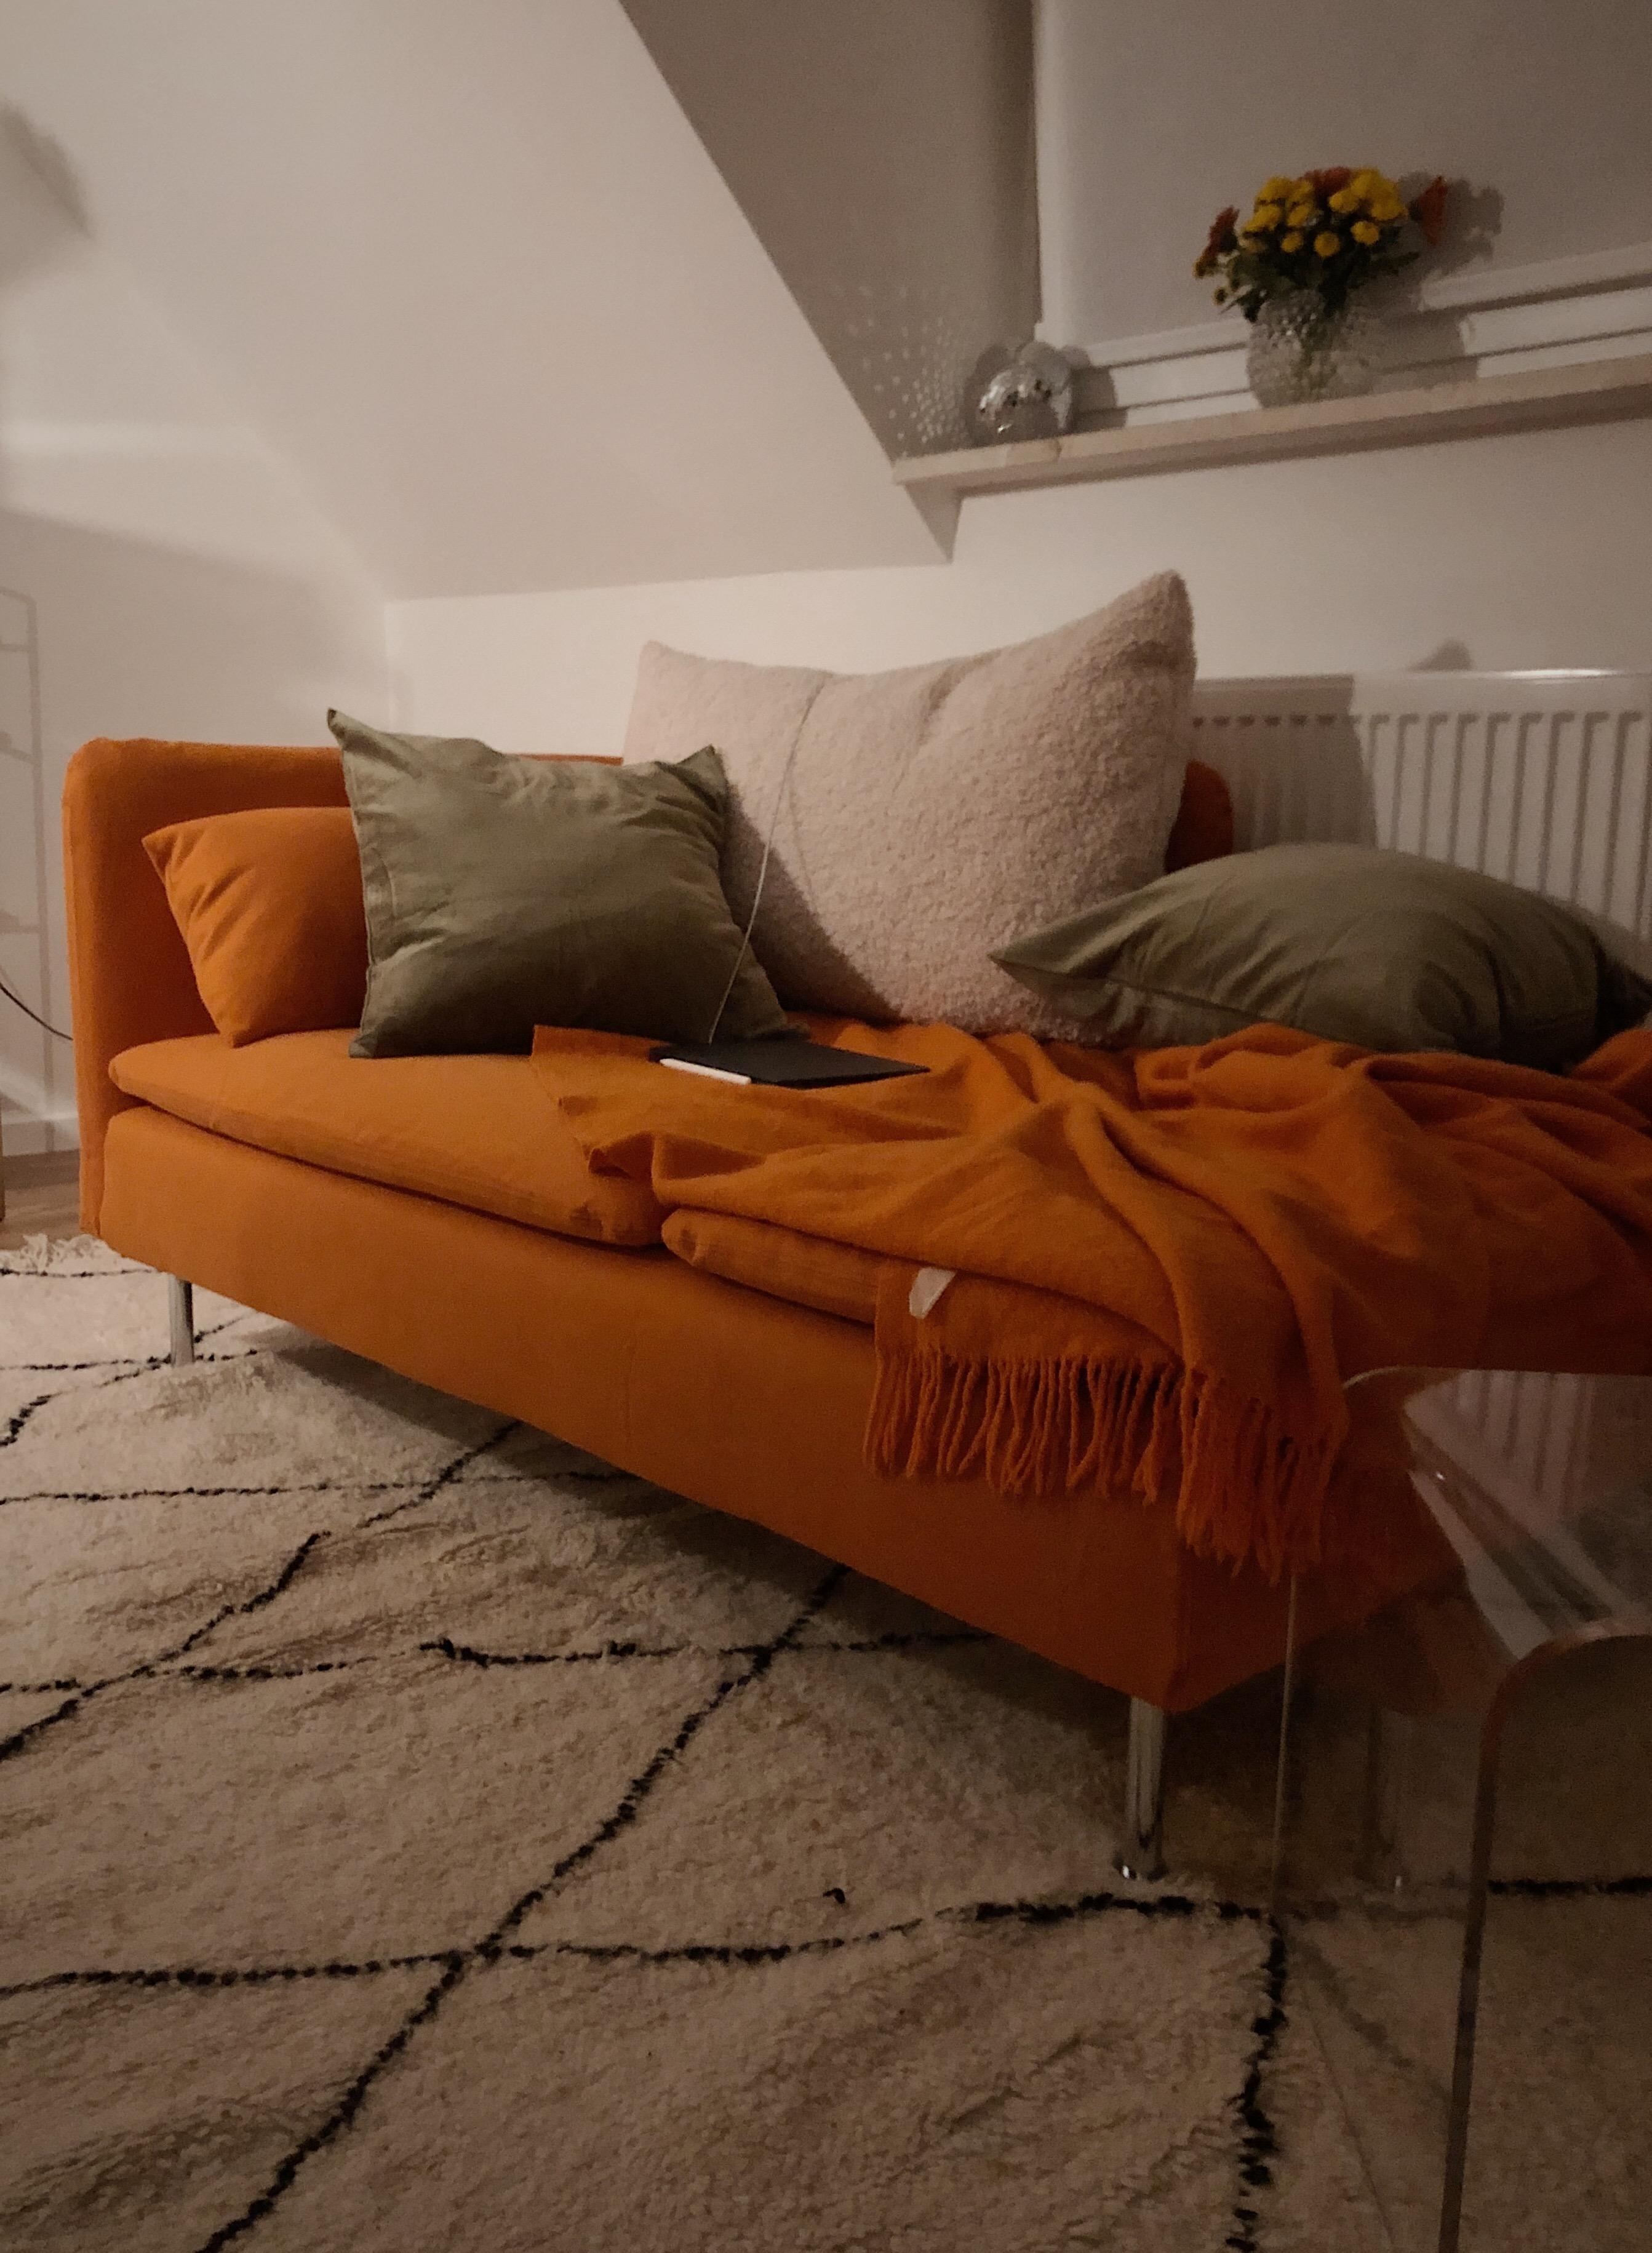 Spaceship soon 🐑🧡
#sofa #orange #shearling #shearlingsofa #sheepsofa #soon #interior #livingroom #midcentury